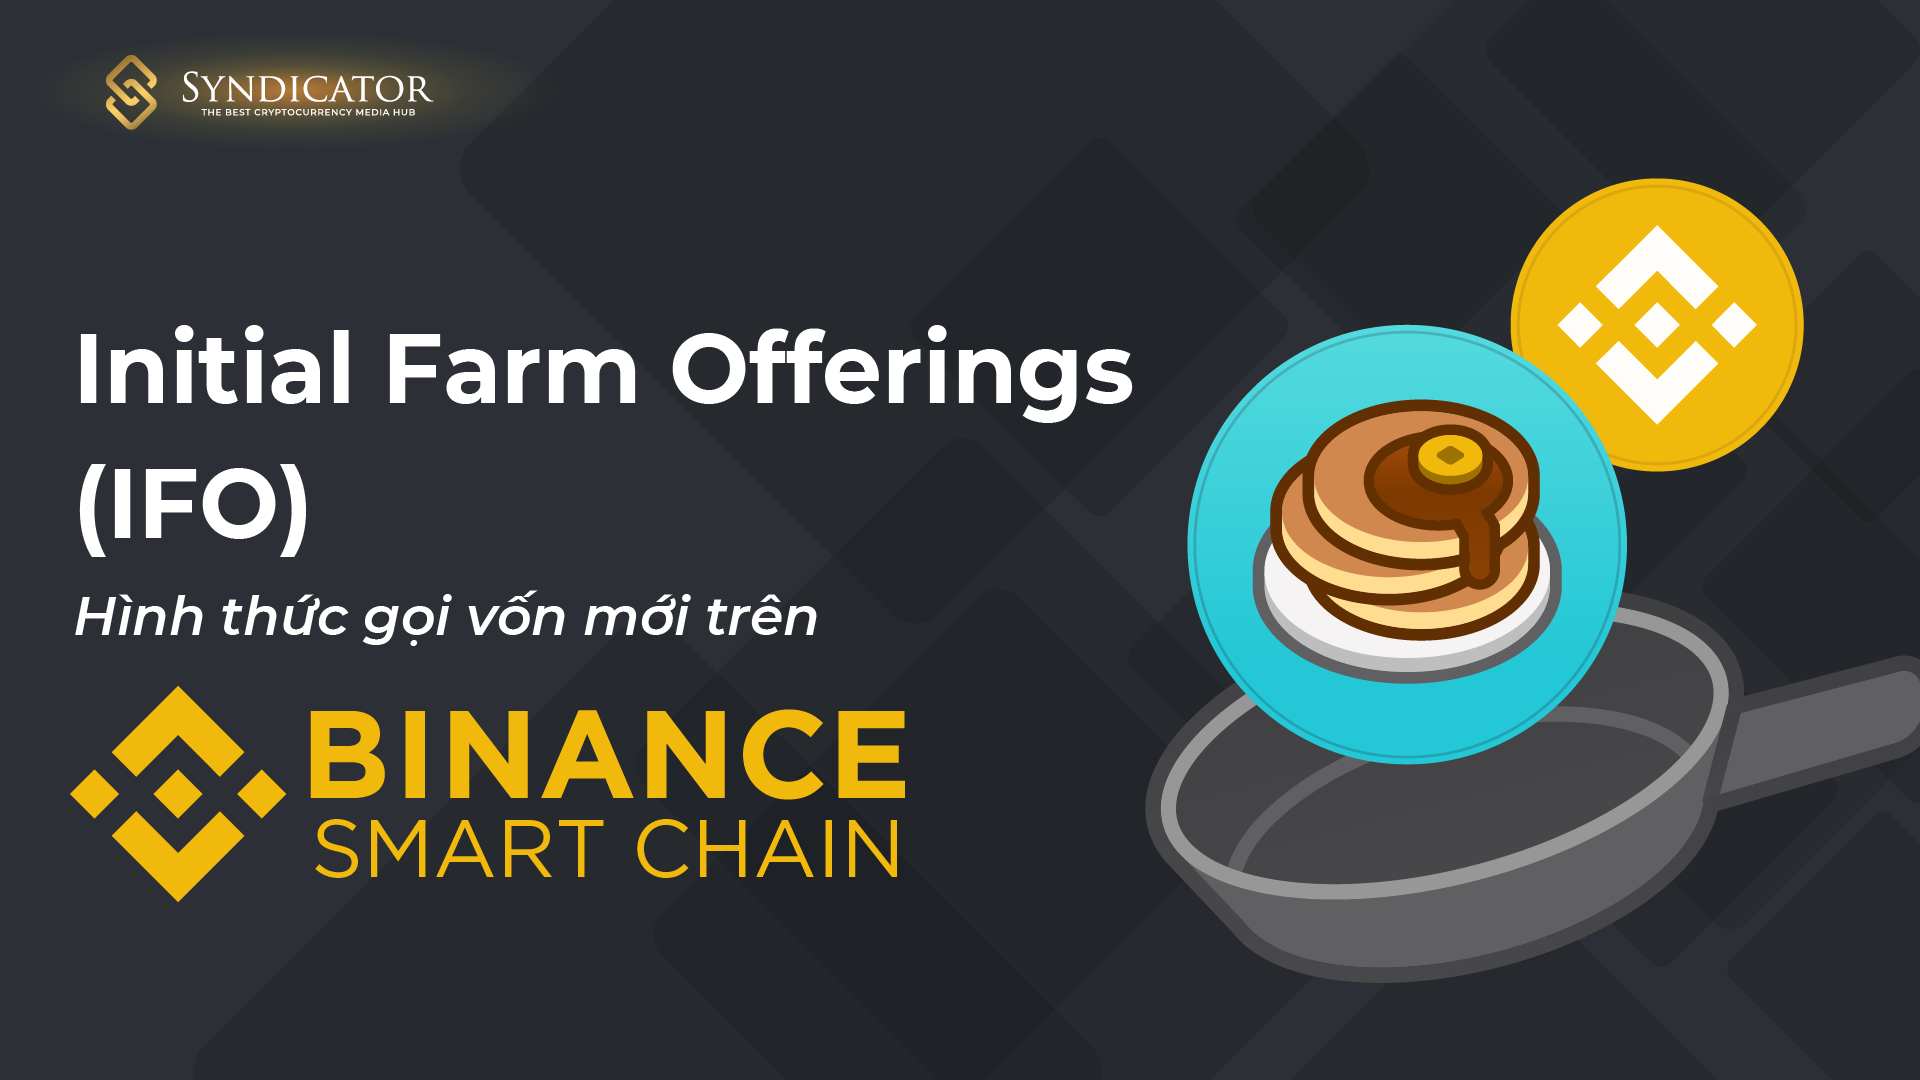 Initial Farm Offerings (IFO) - Hình thức gọi vốn mới trên Binance Smart Chain - Public sale pancake - syndicator